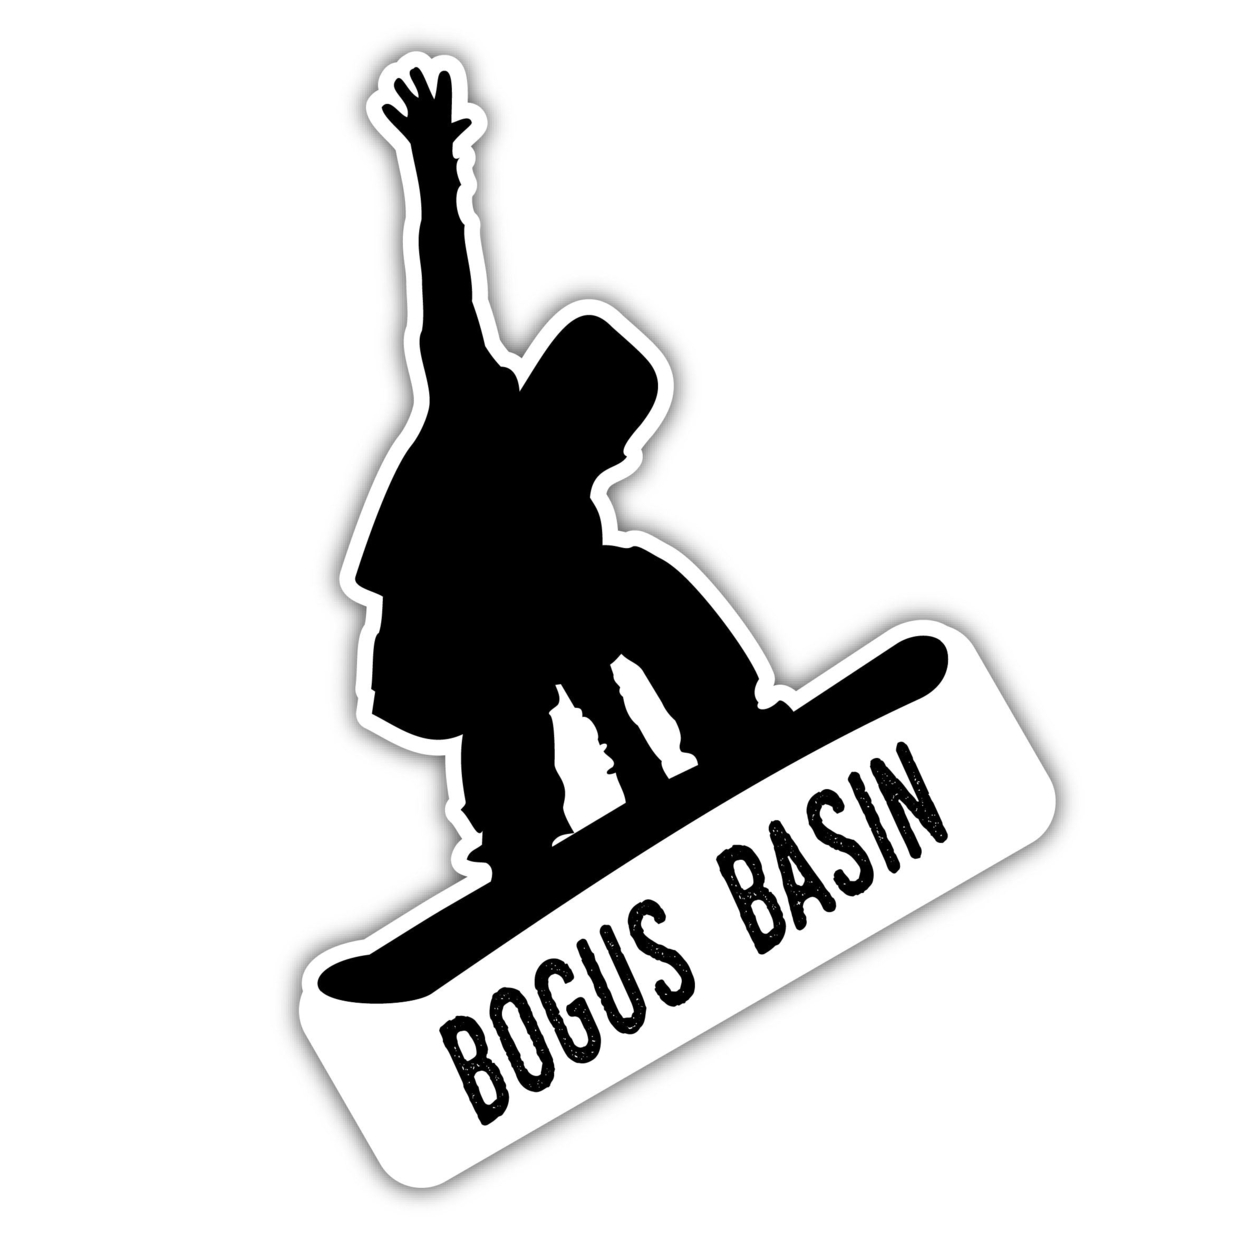 Bogus Basin Idaho Ski Adventures Souvenir Approximately 5 X 2.5-Inch Vinyl Decal Sticker Goggle Design